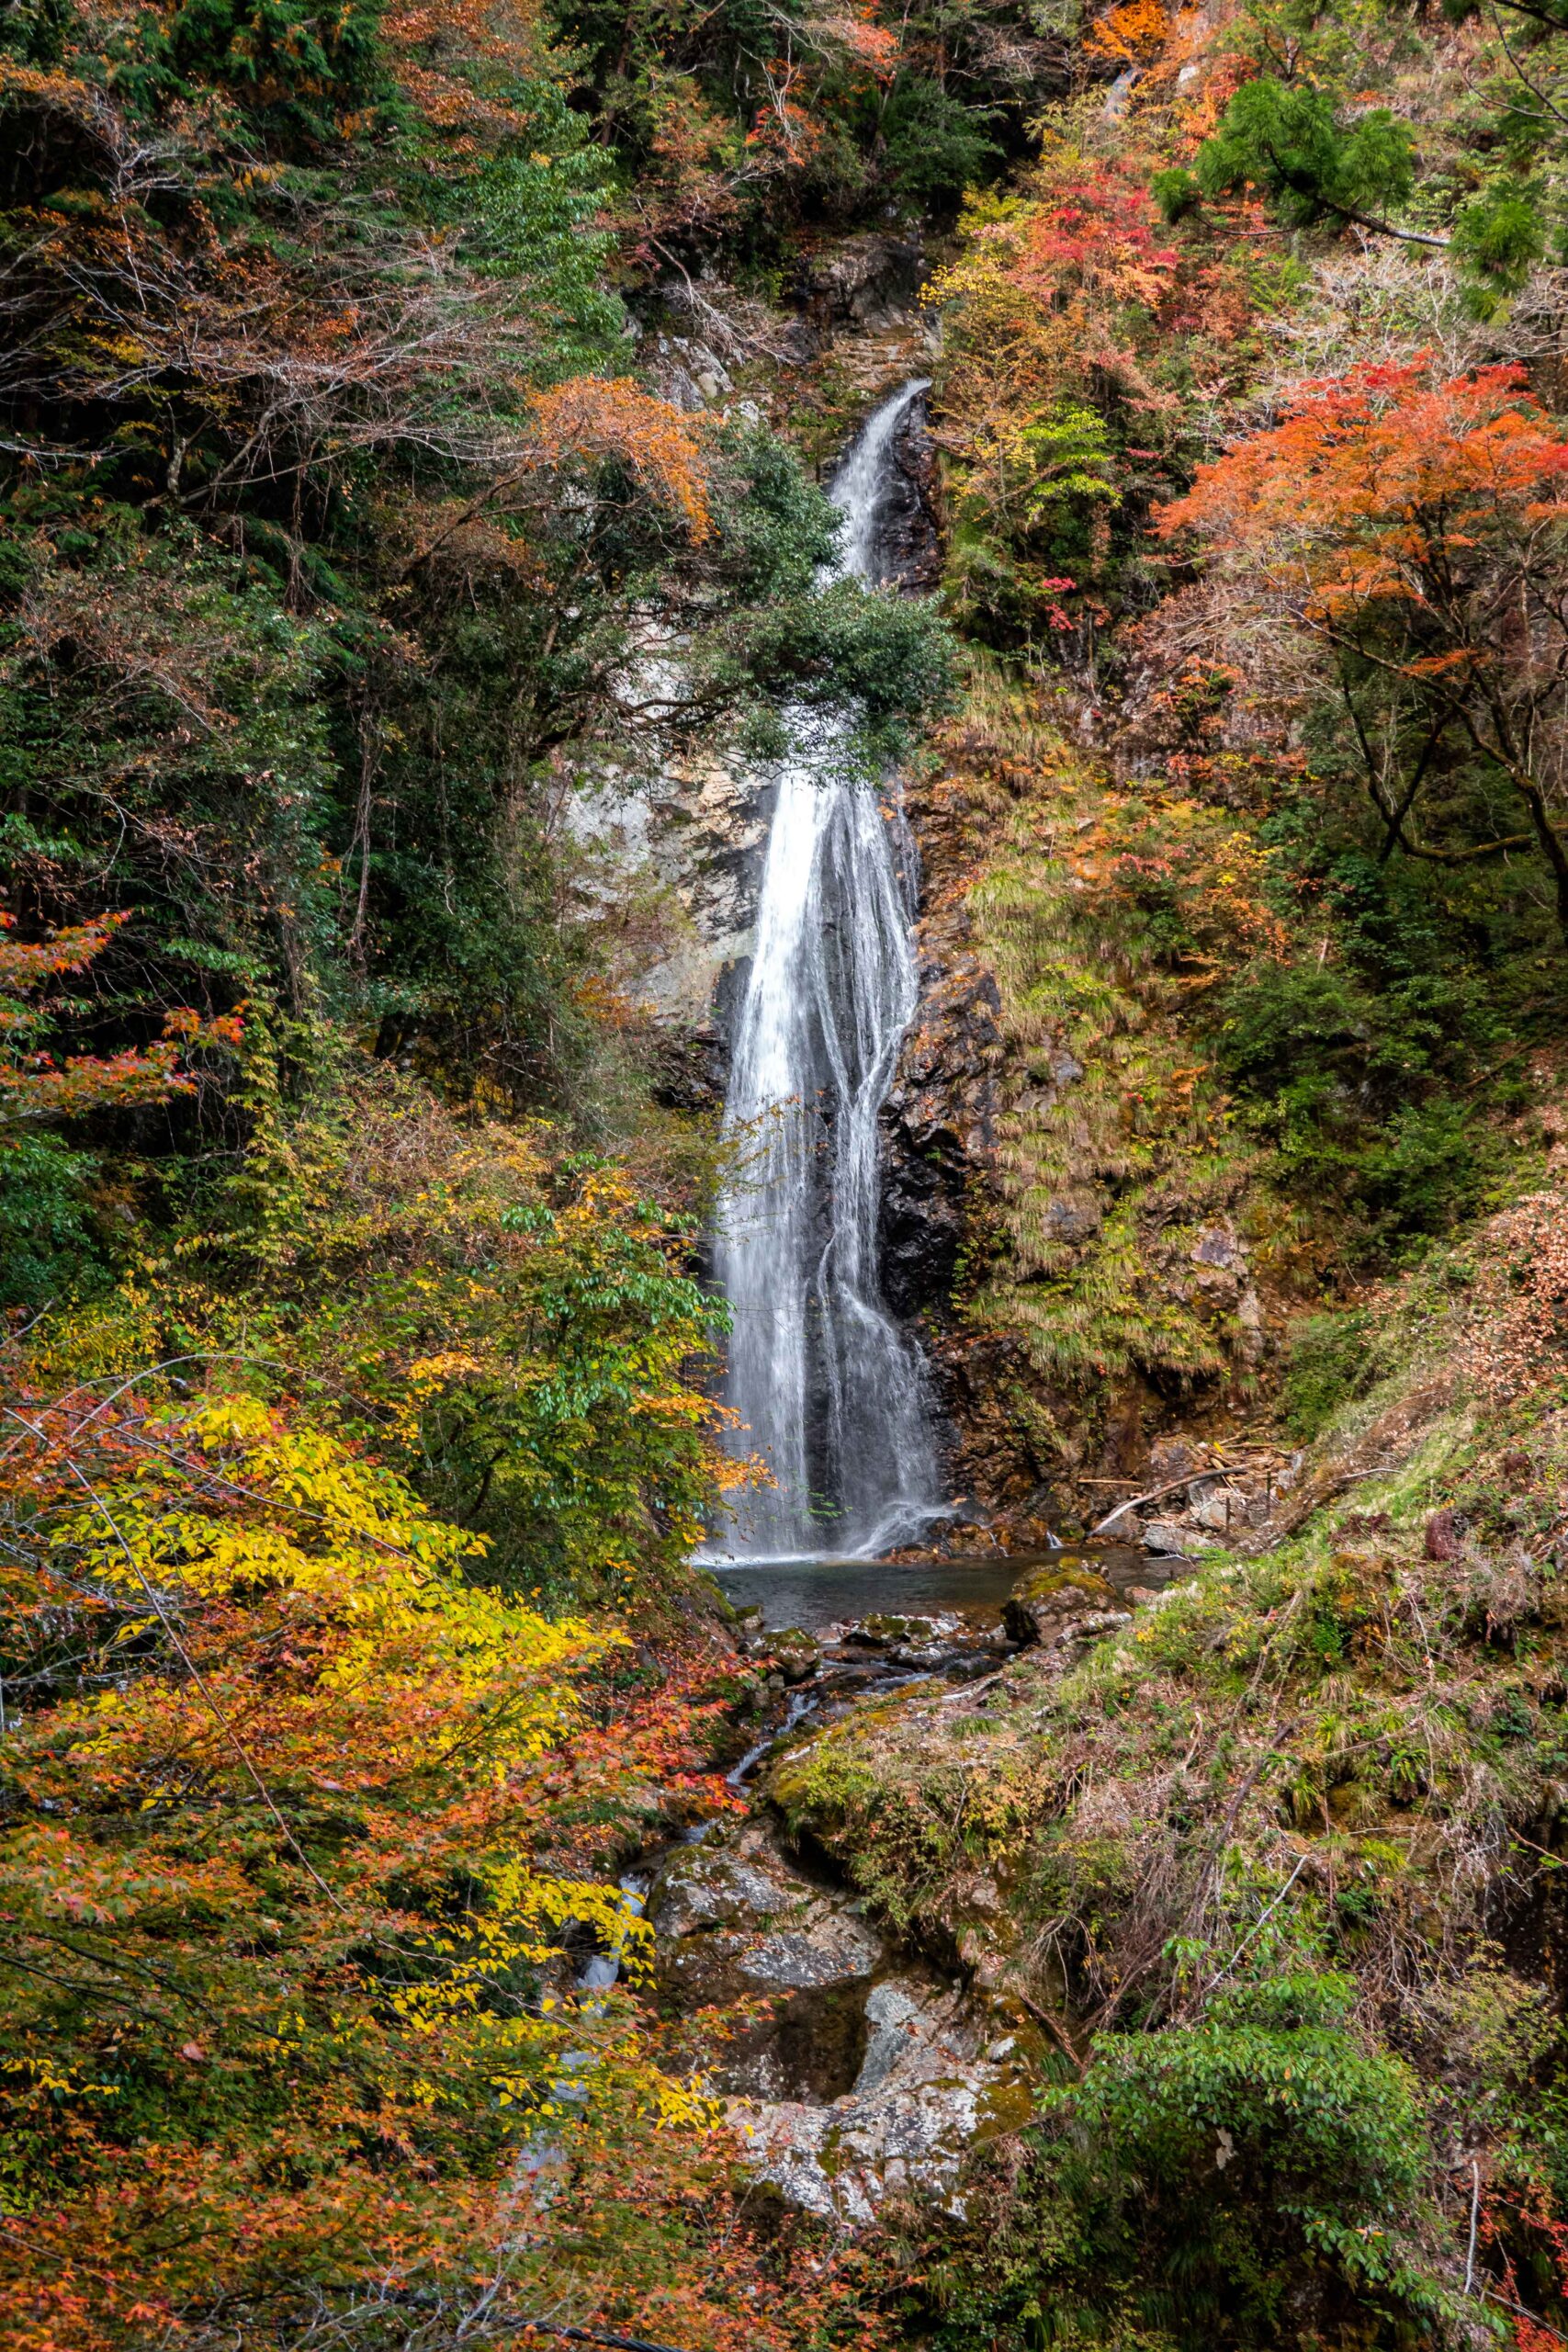 DSC07961-scaled 兵庫県  原不動滝(日本の滝100選に選定された紅葉景色の美しい絶景の滝 ! 撮影した写真の紹介、 アクセス情報など)　